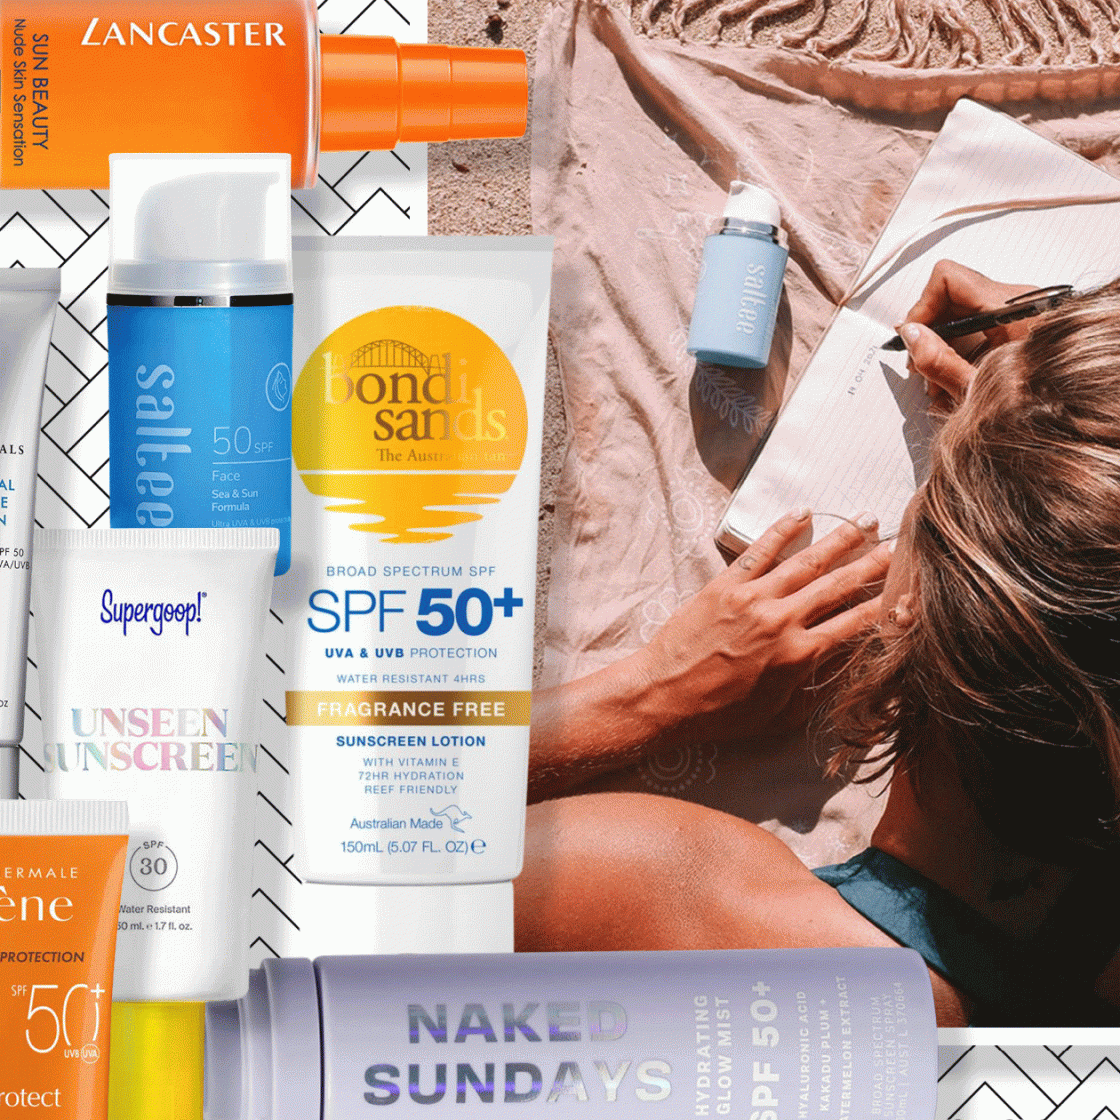 Best Sunscreens For Under Makeup Outlet Clearance, Save 46% | jlcatj.gob.mx